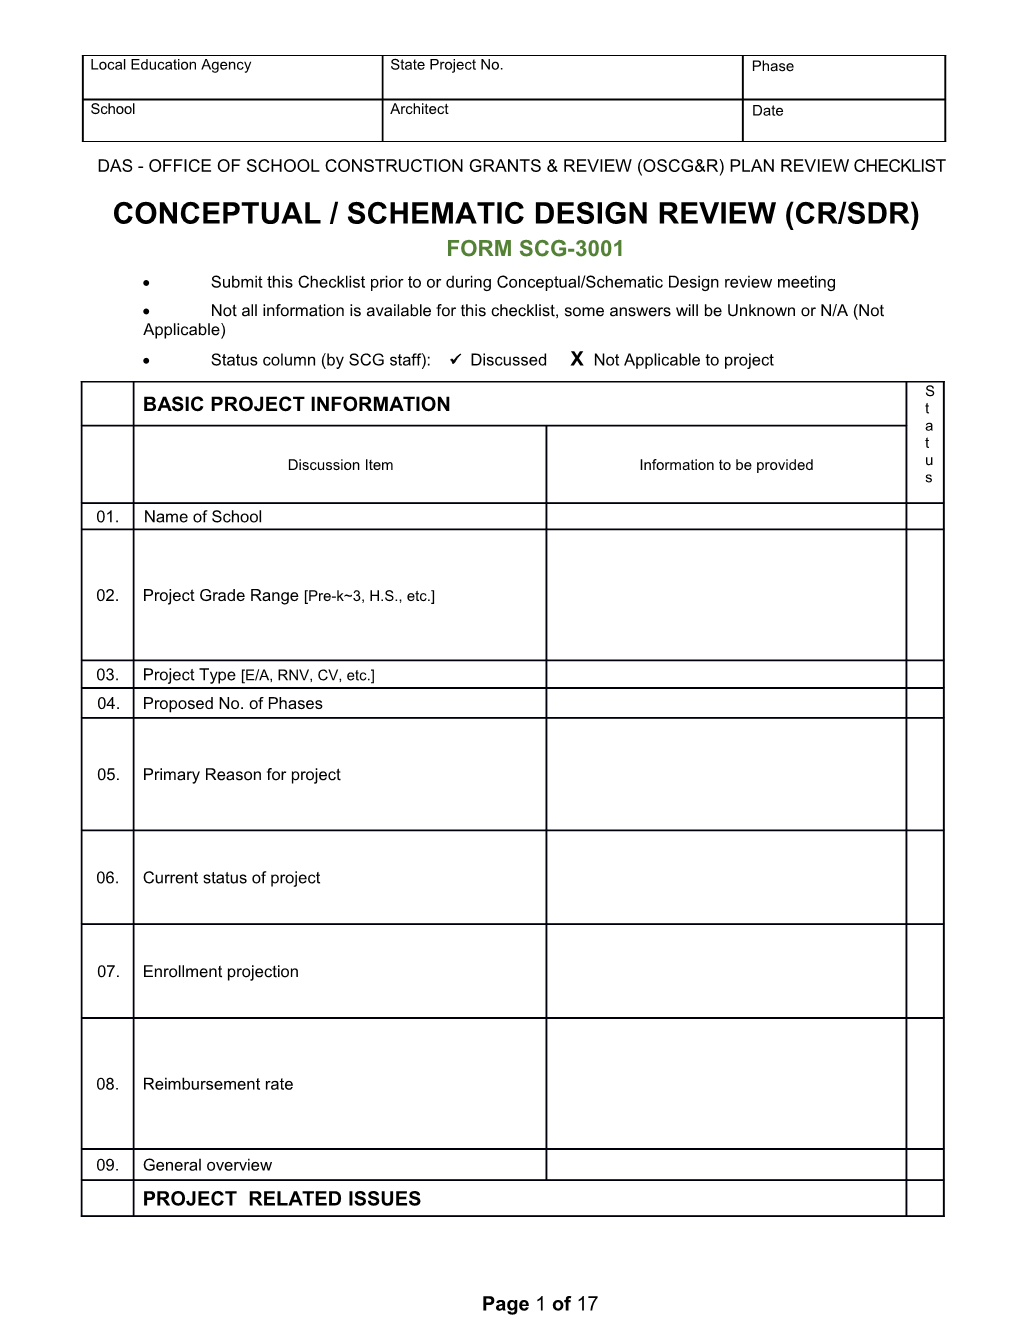 FORM SCG-3001 CR-SDR Checklist